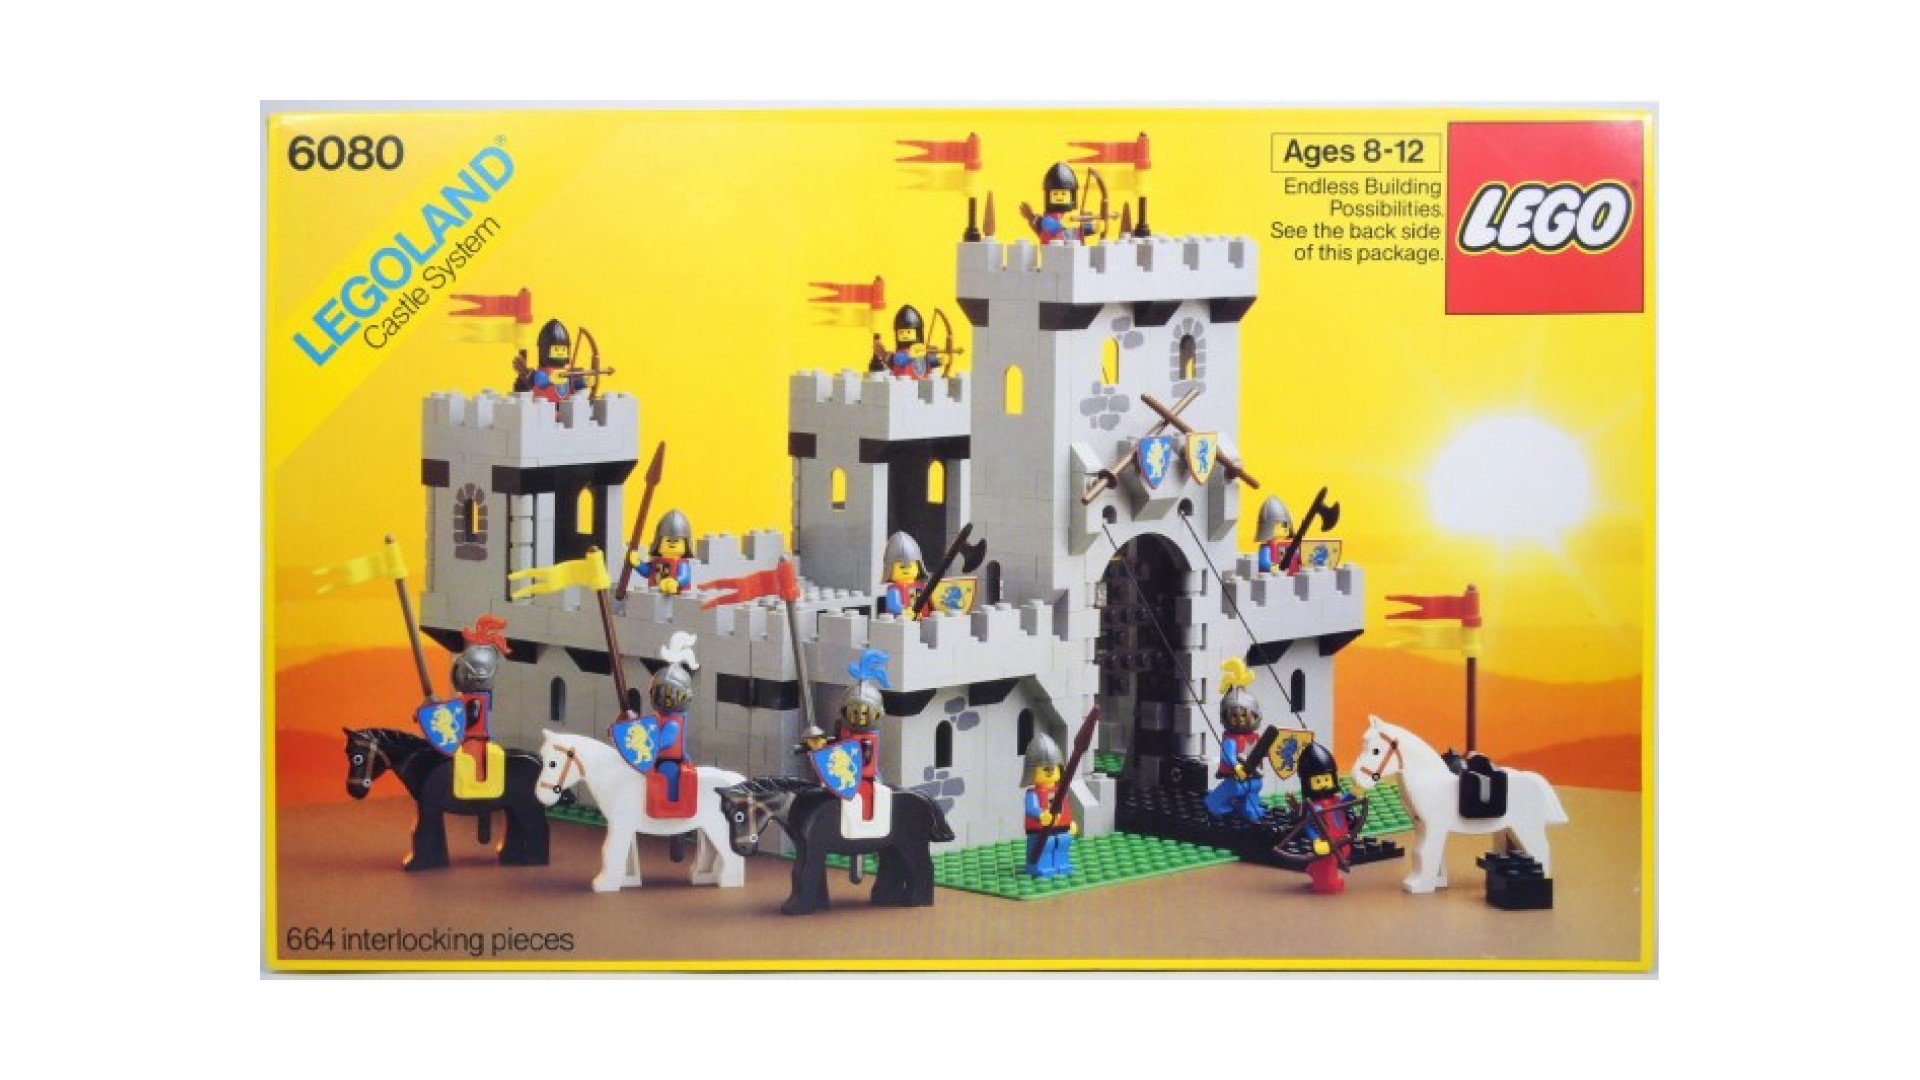 Best Lego sets - the classic Lego King's Castle set.